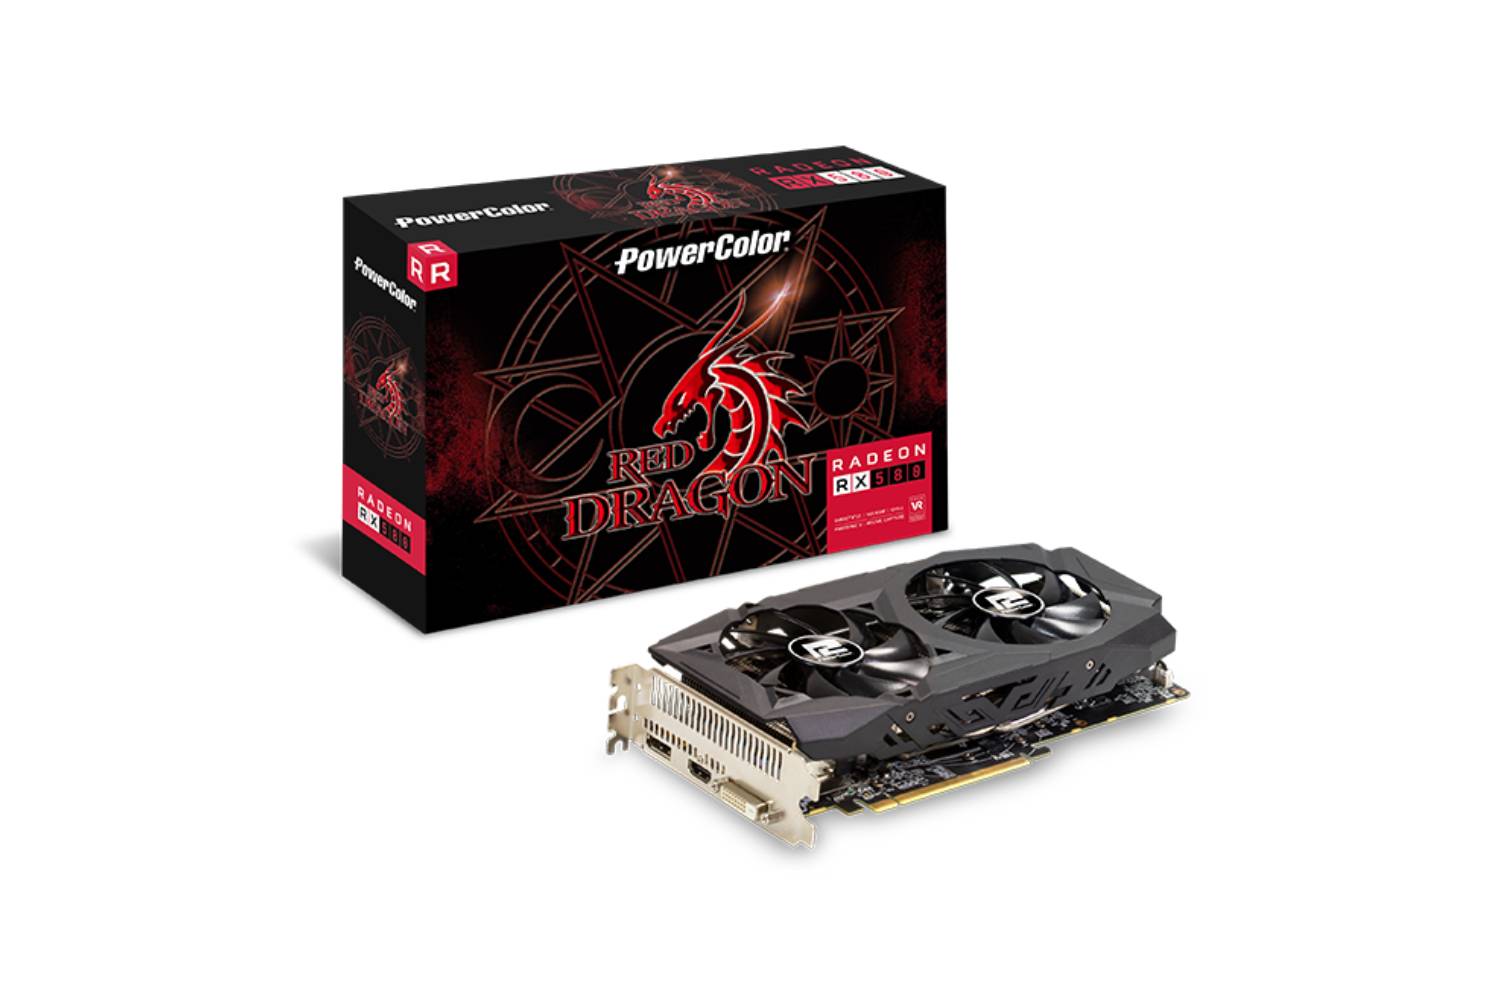 PowerColor Red Dragon Radeon RX 580 8GB GDDR5 AXRX 580 8GBD5 DHDV2/OC